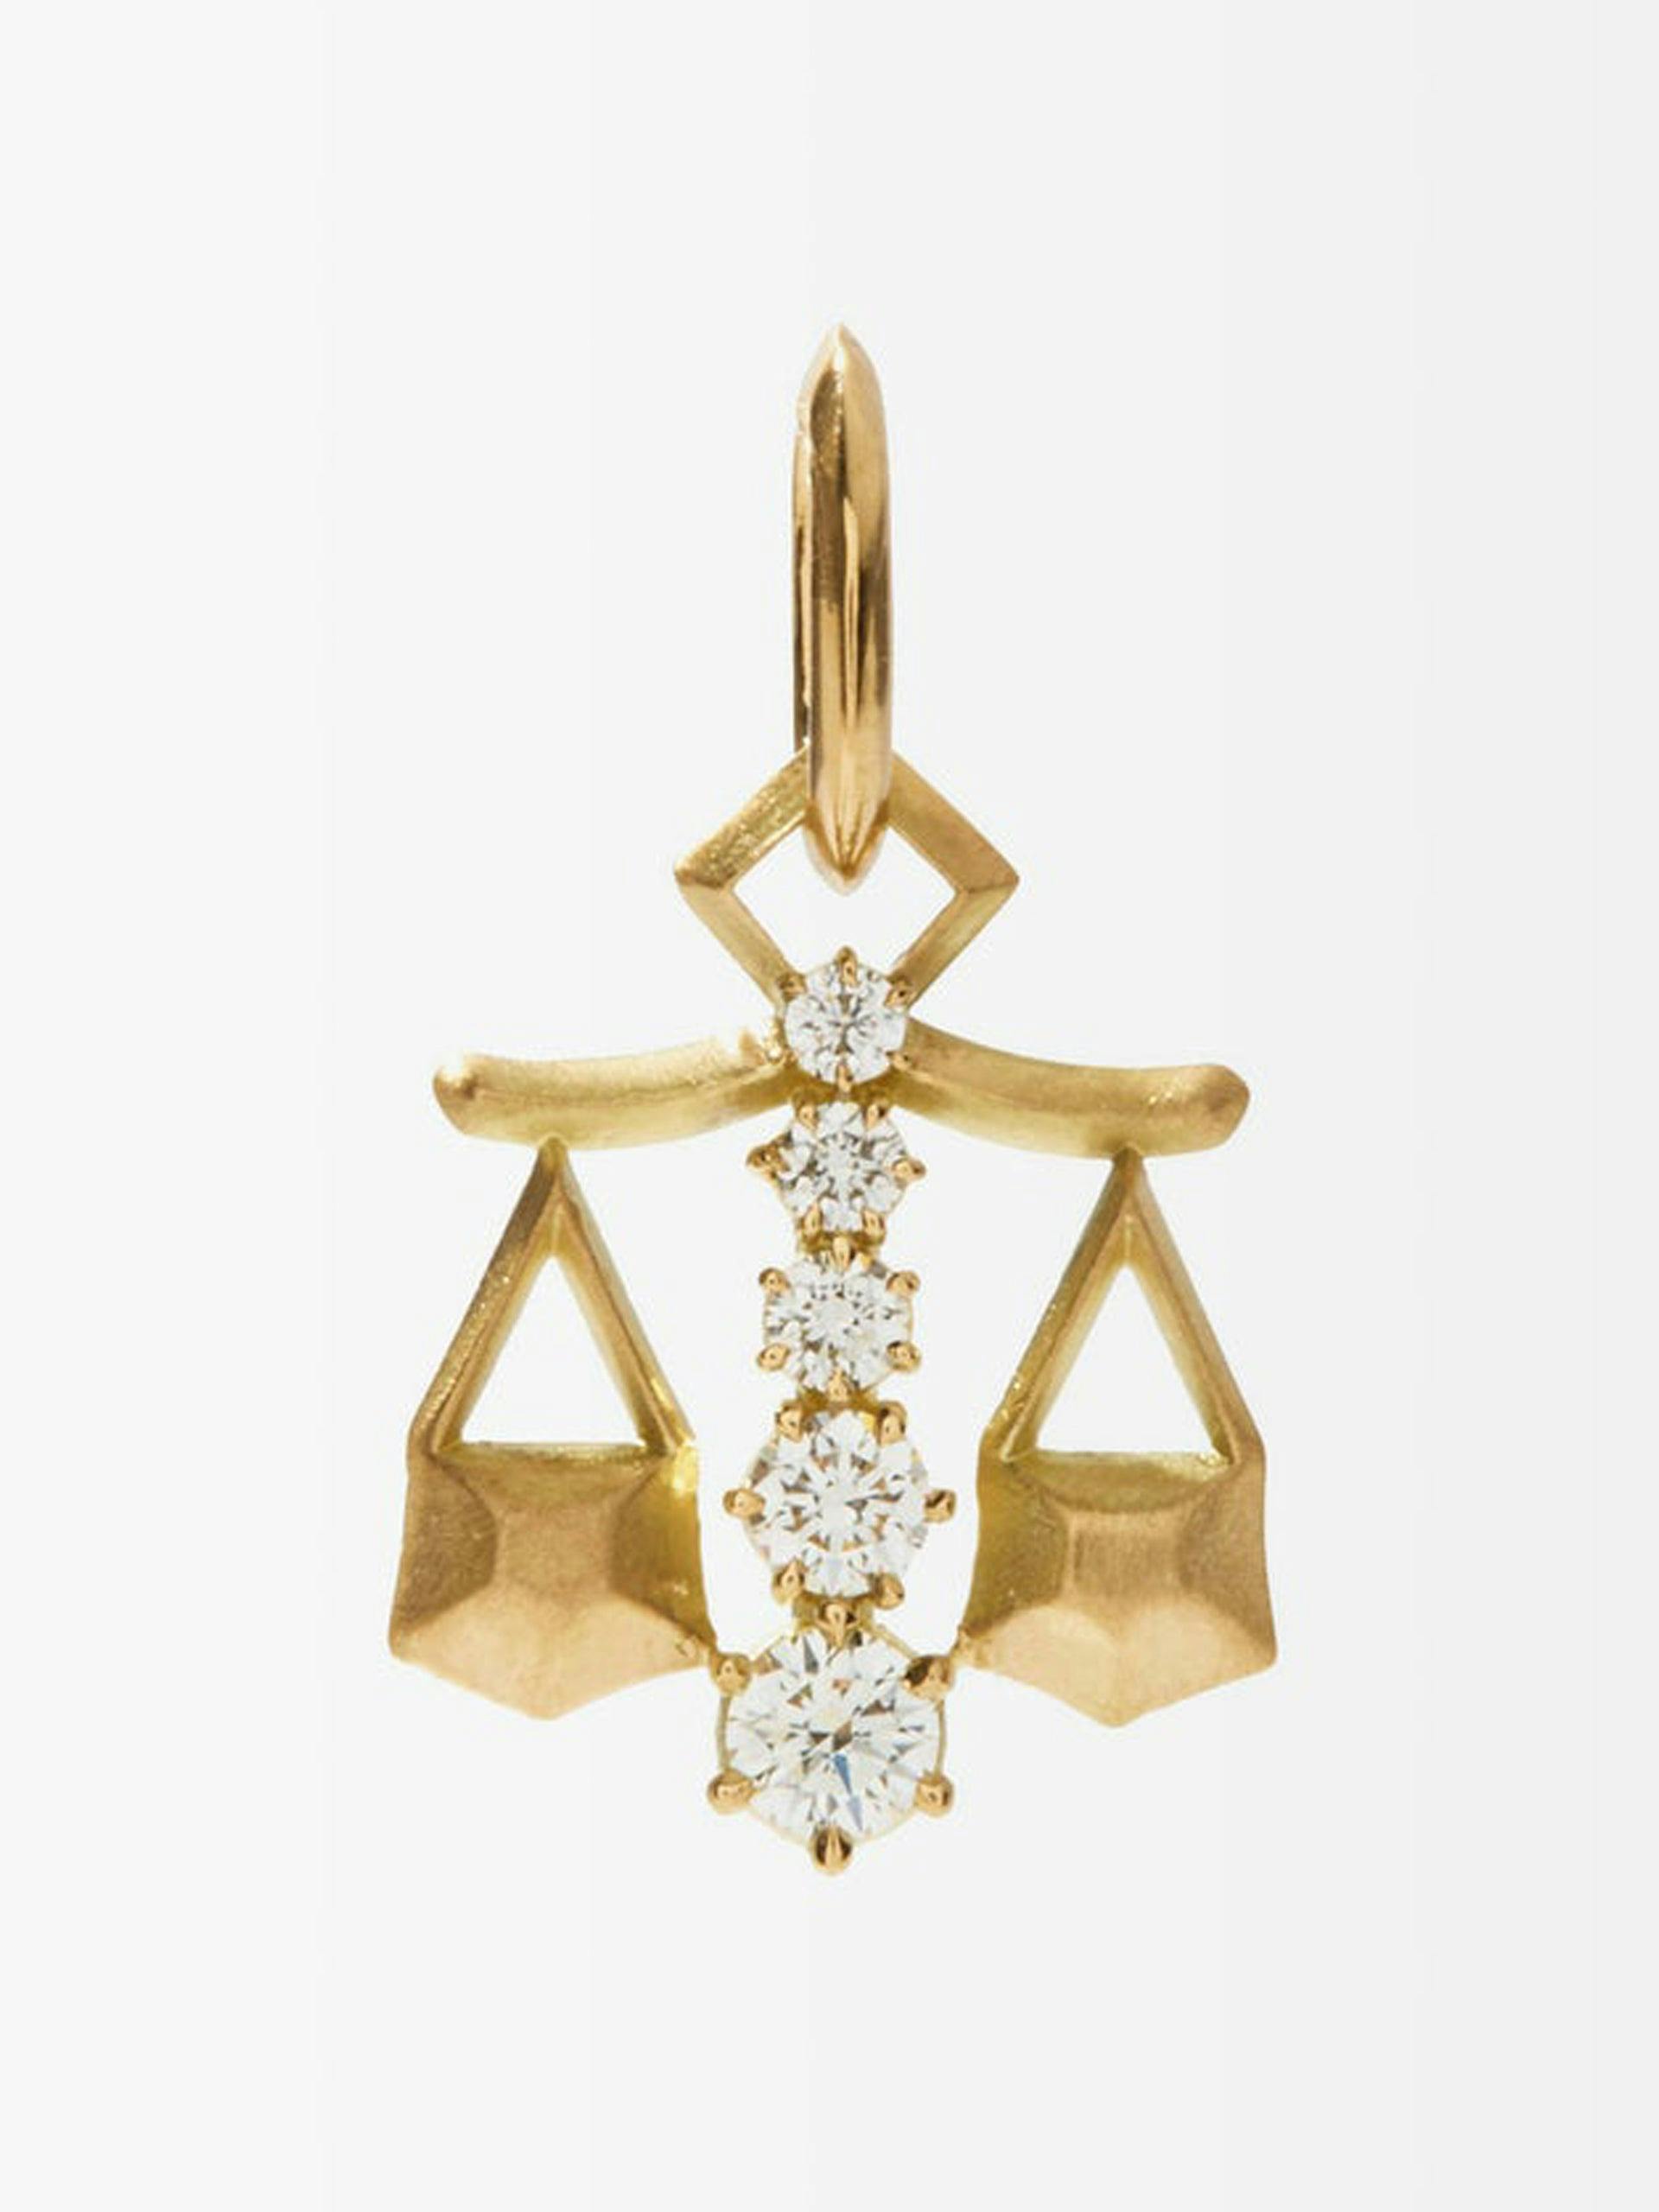 Diamond and 18kt gold Libra charm